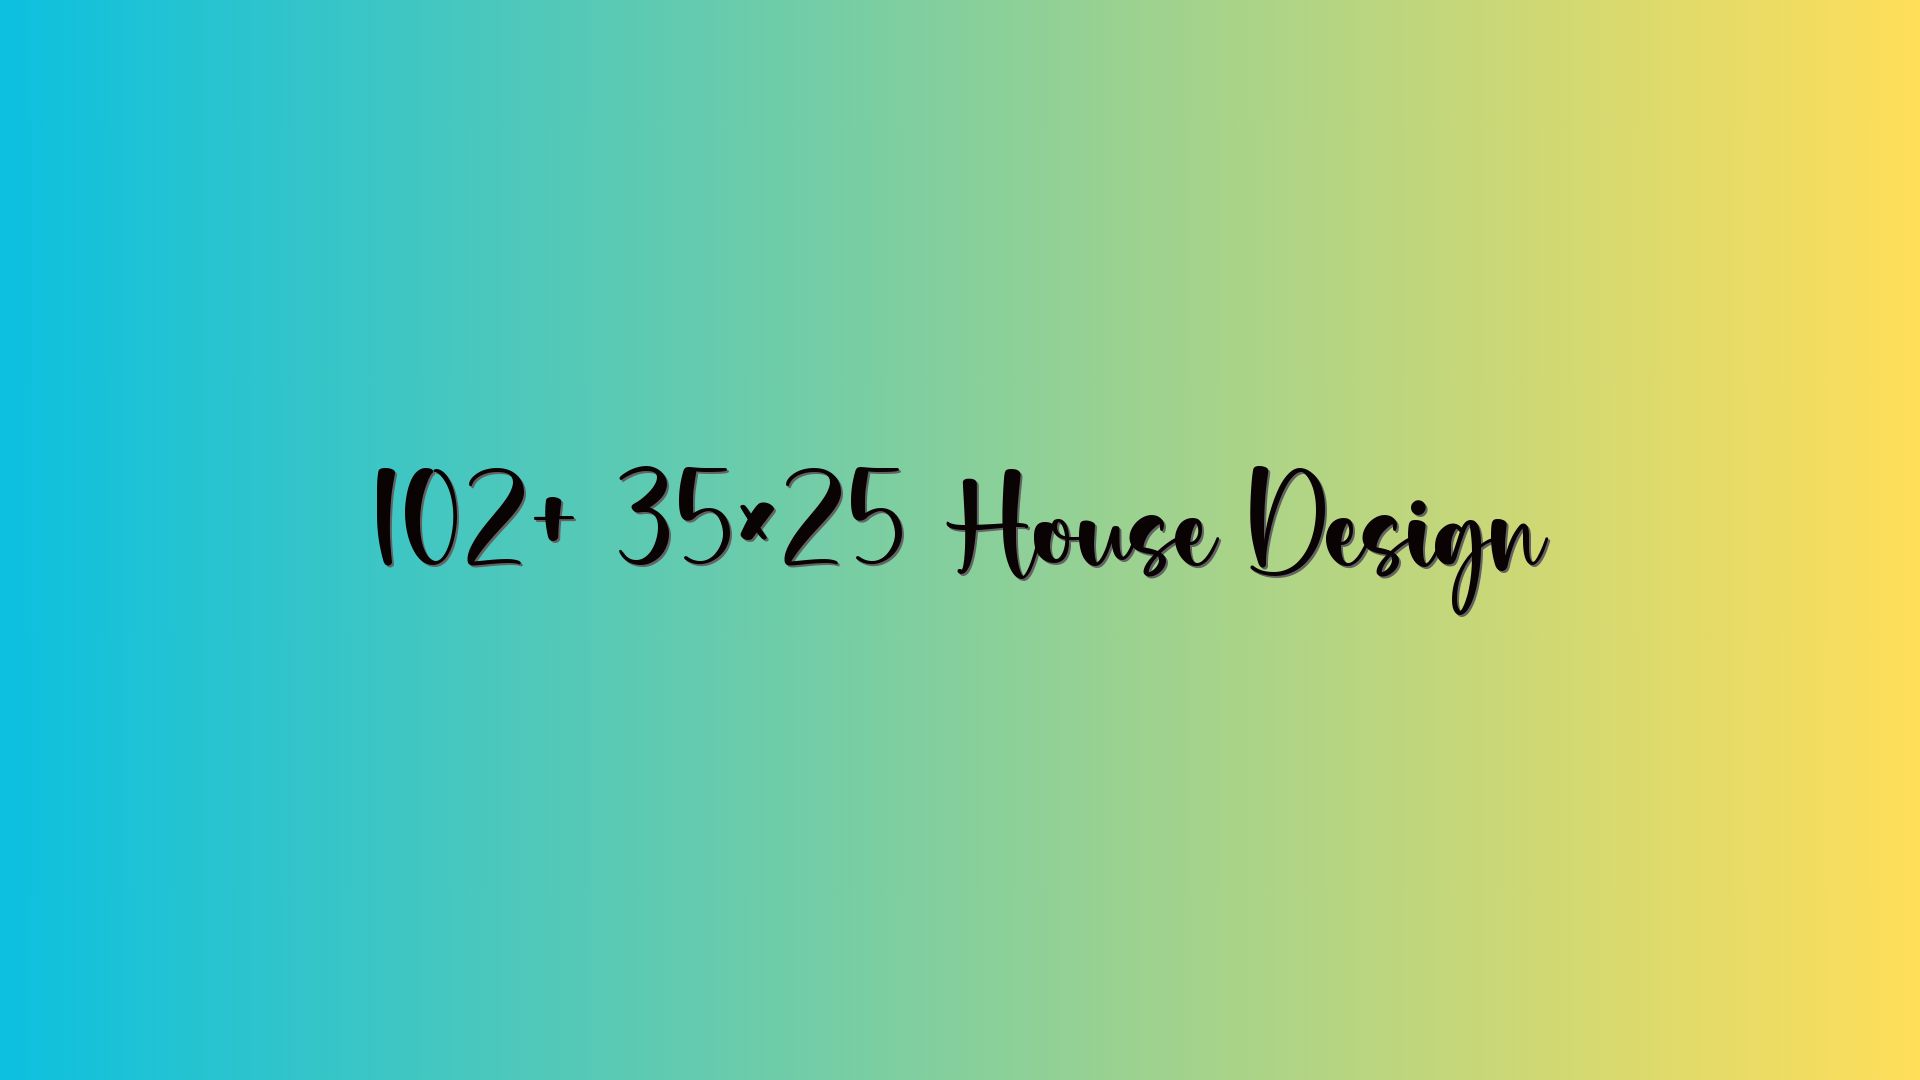 102+ 35×25 House Design